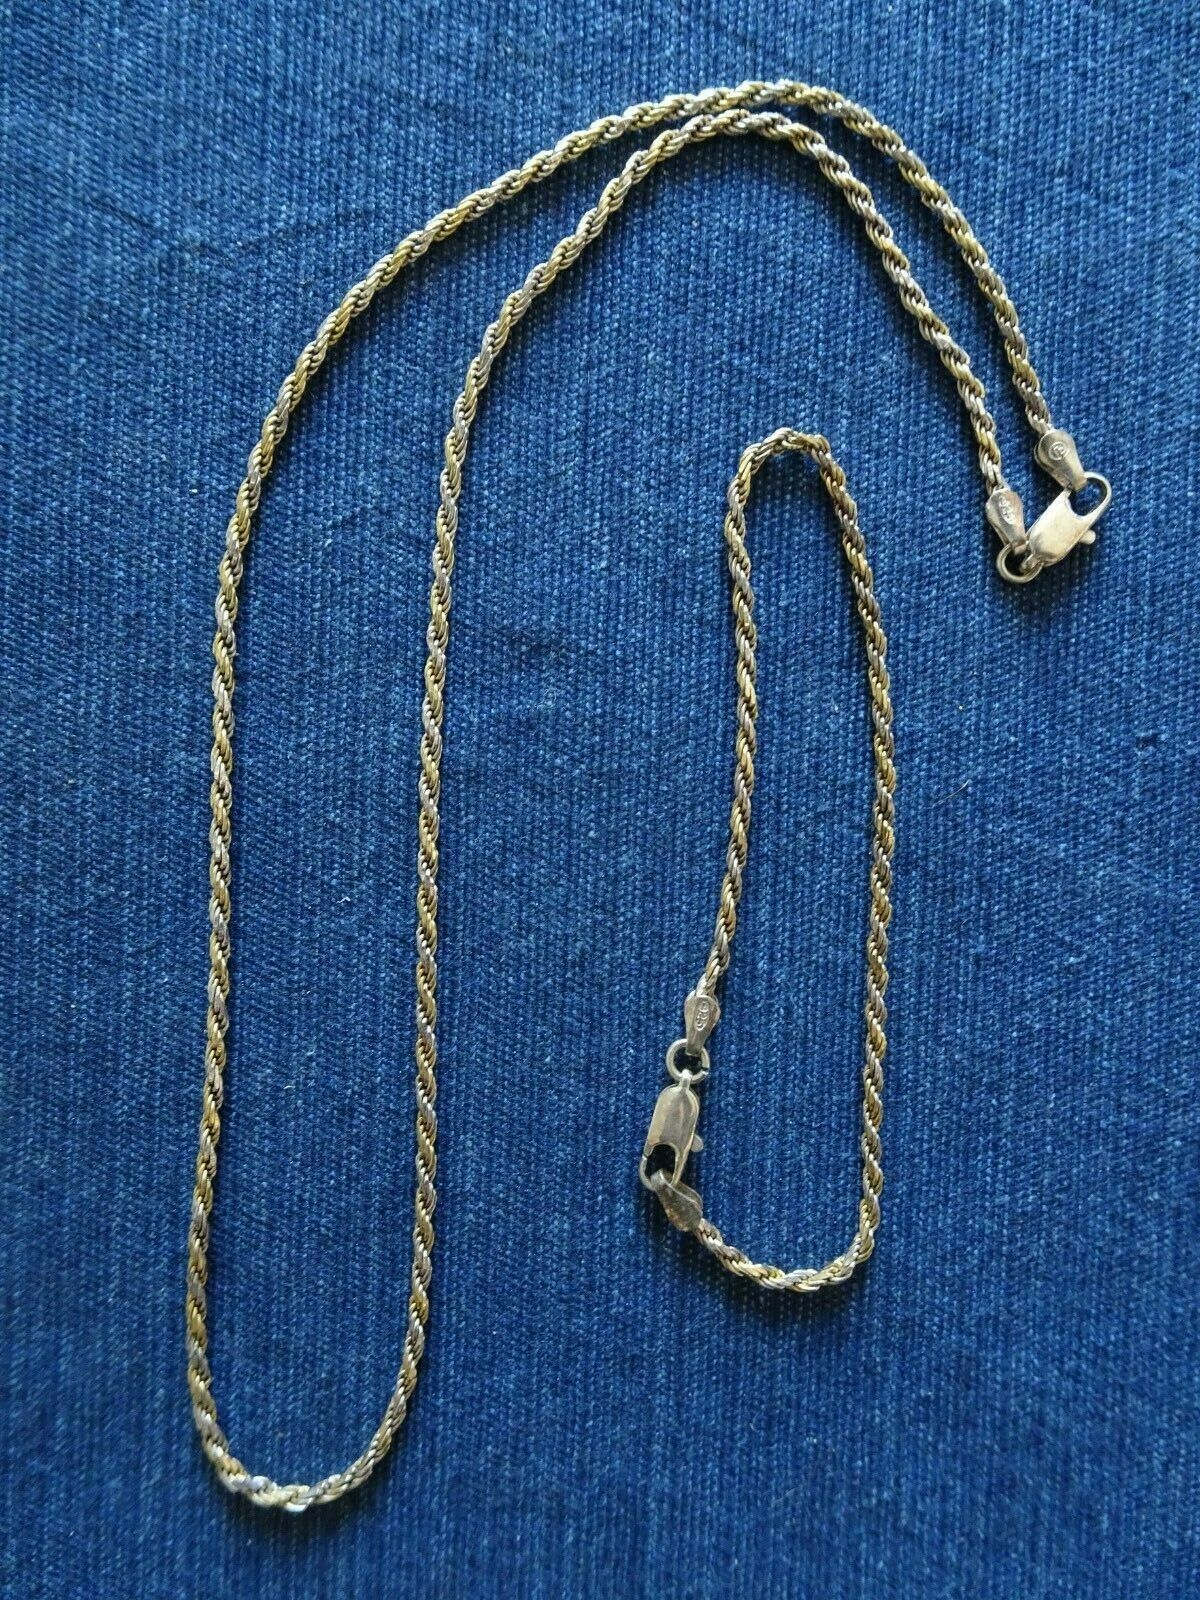 Sterling Silver Necklace And Bracelet Set